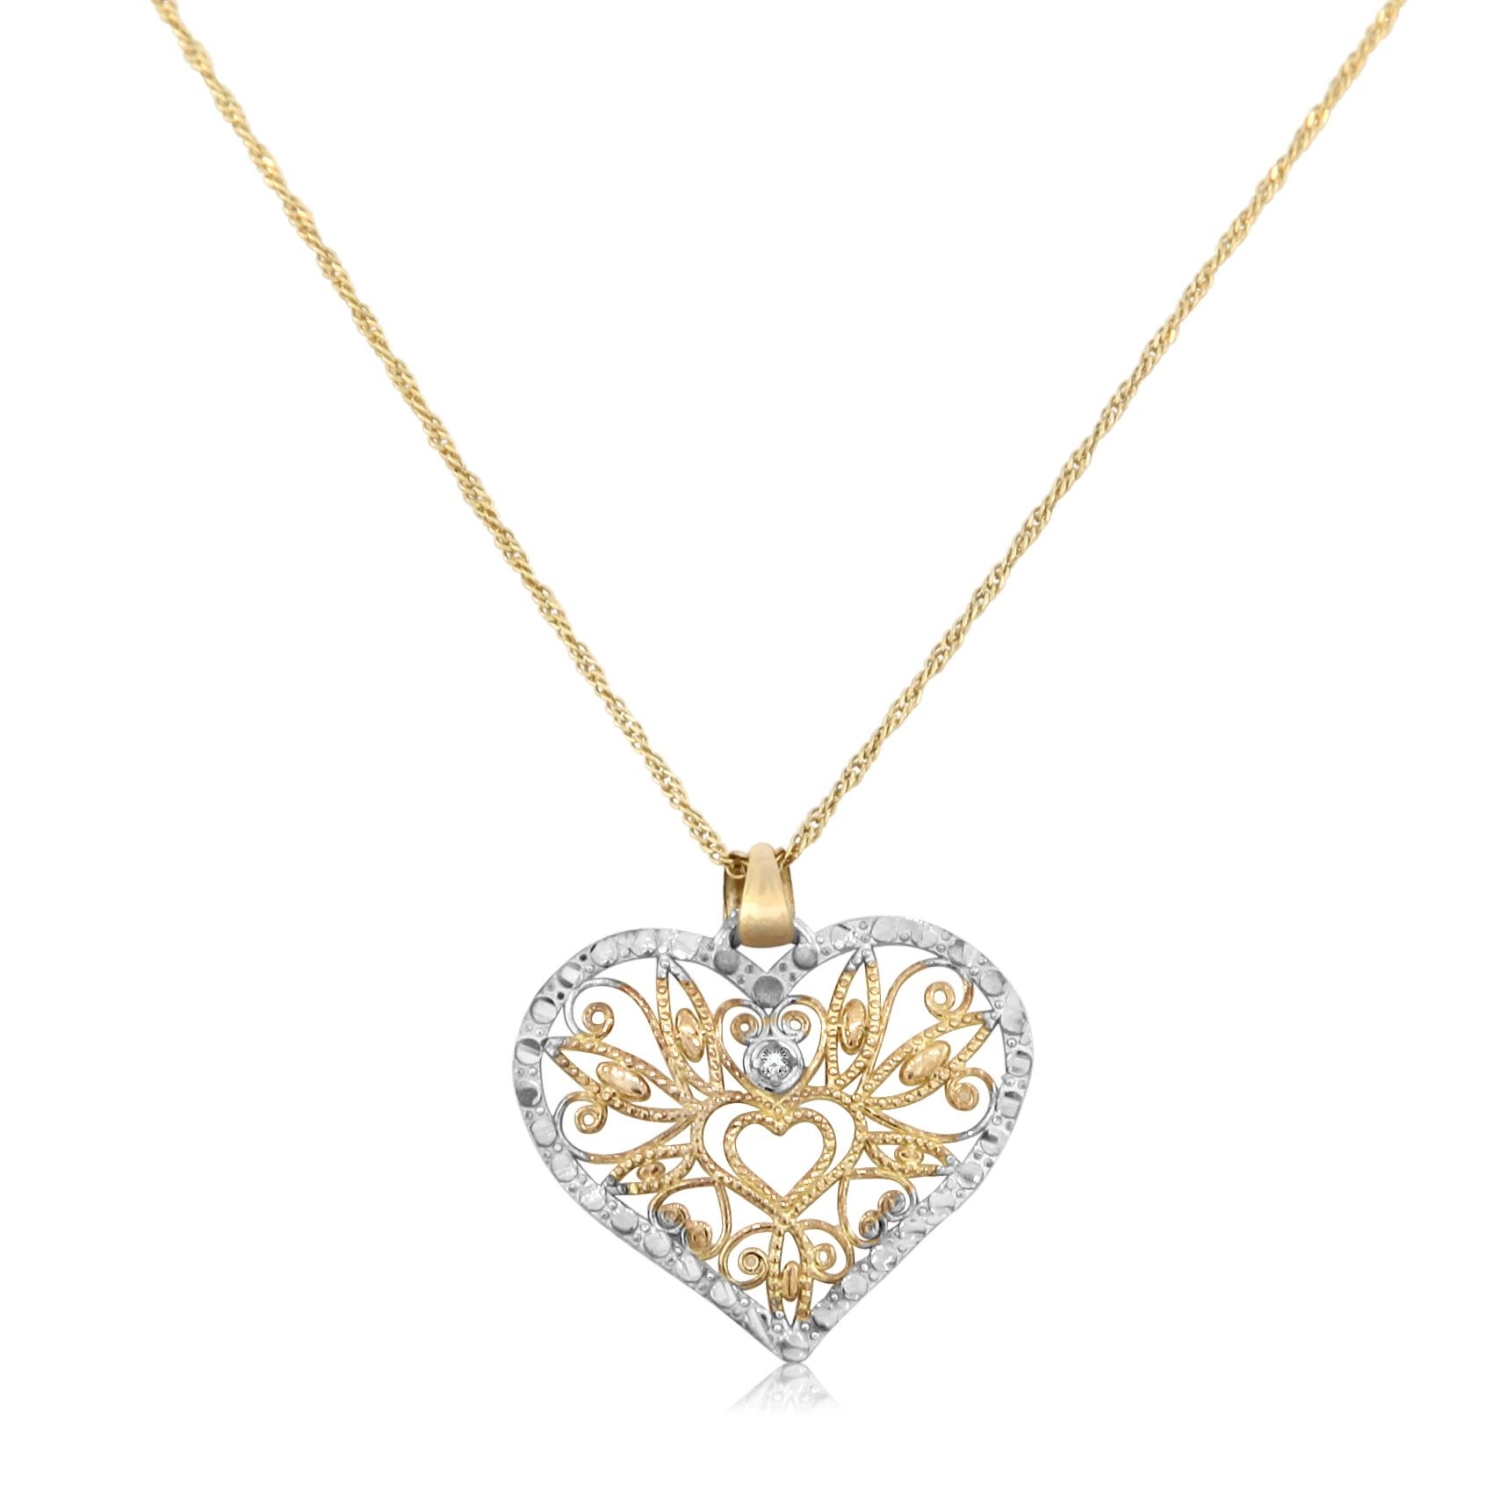 Filigree: 14K Gold Heart Pendant with Diamond - 1